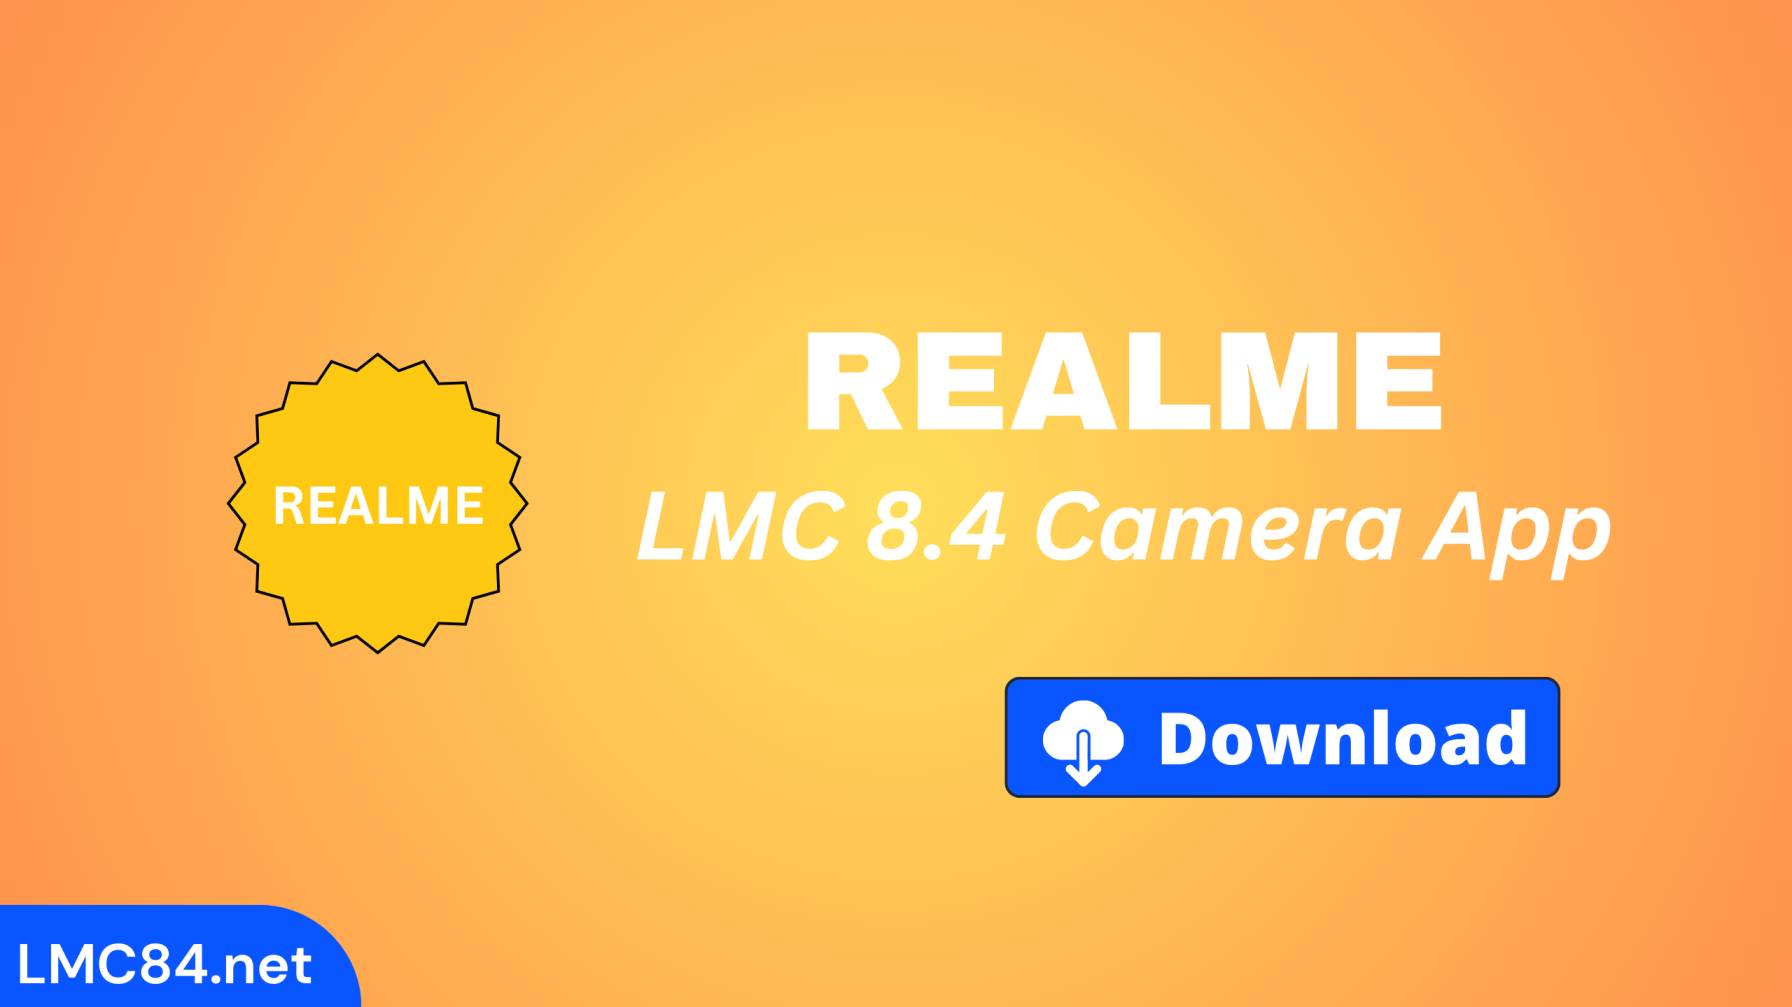 Download LMC 8.4 Realme